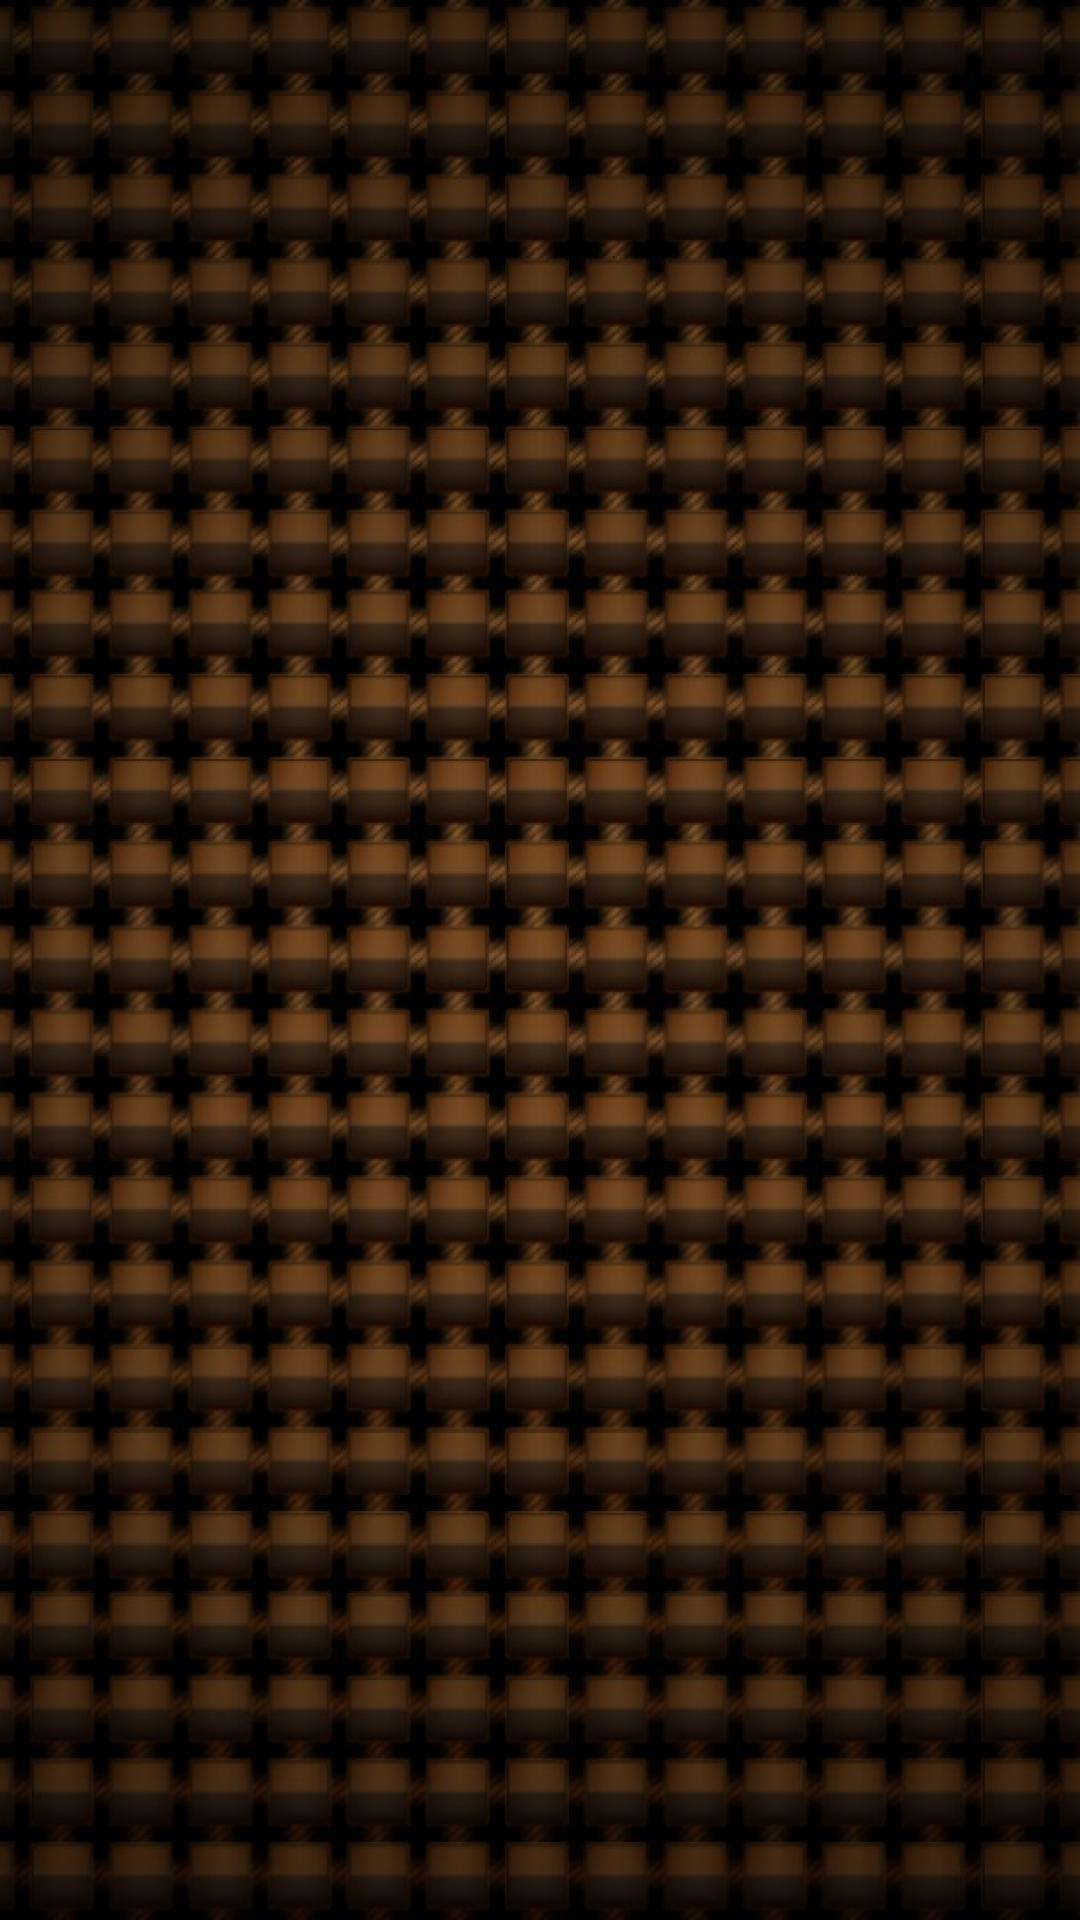 Wallpaper.wiki Carbon Fiber IPhone Wallpaper PIC WPC007867